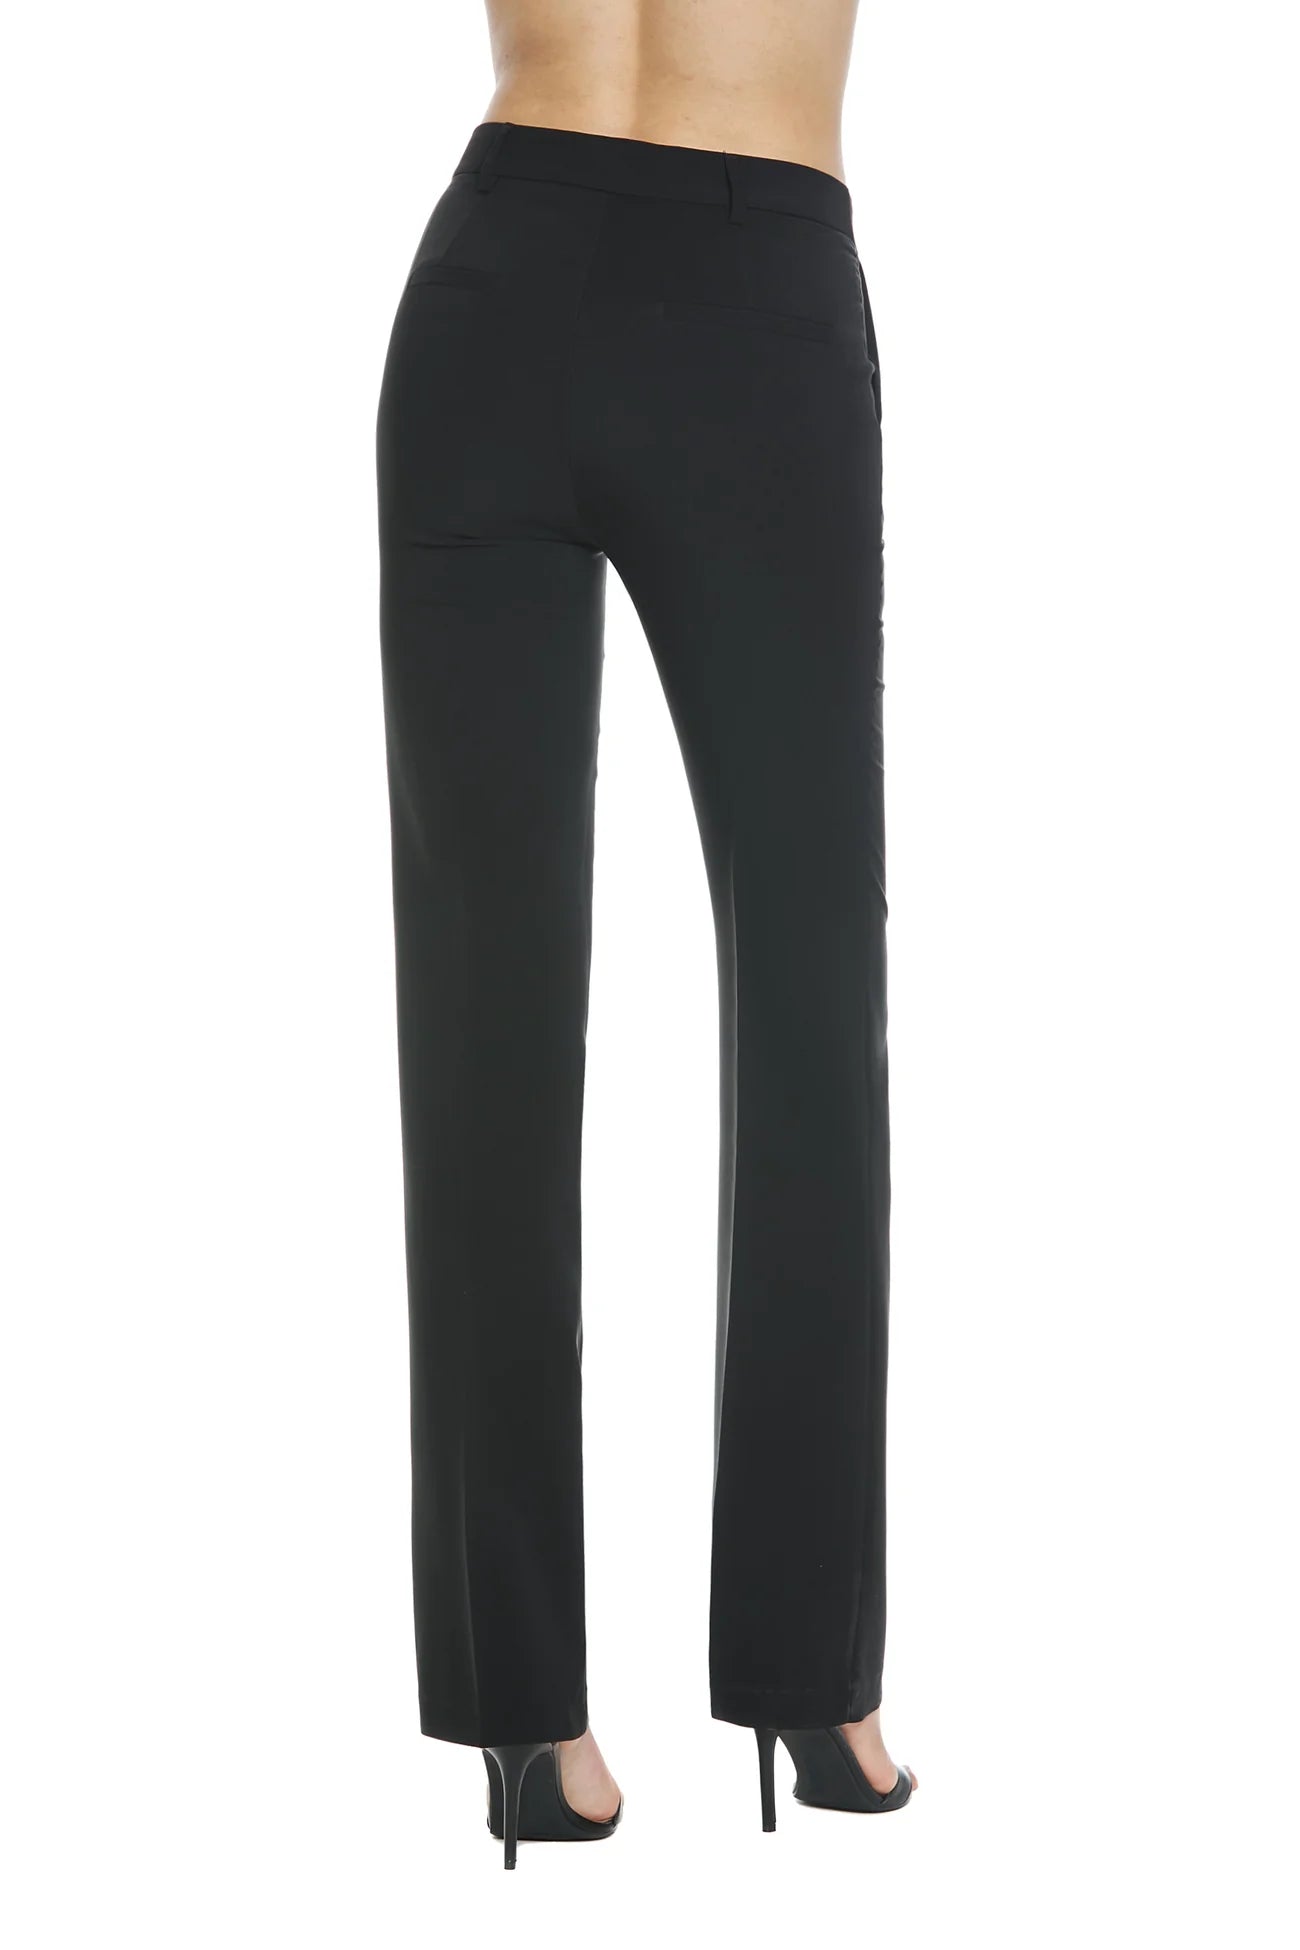 Relish - Pantalone CLOES vita alta Black